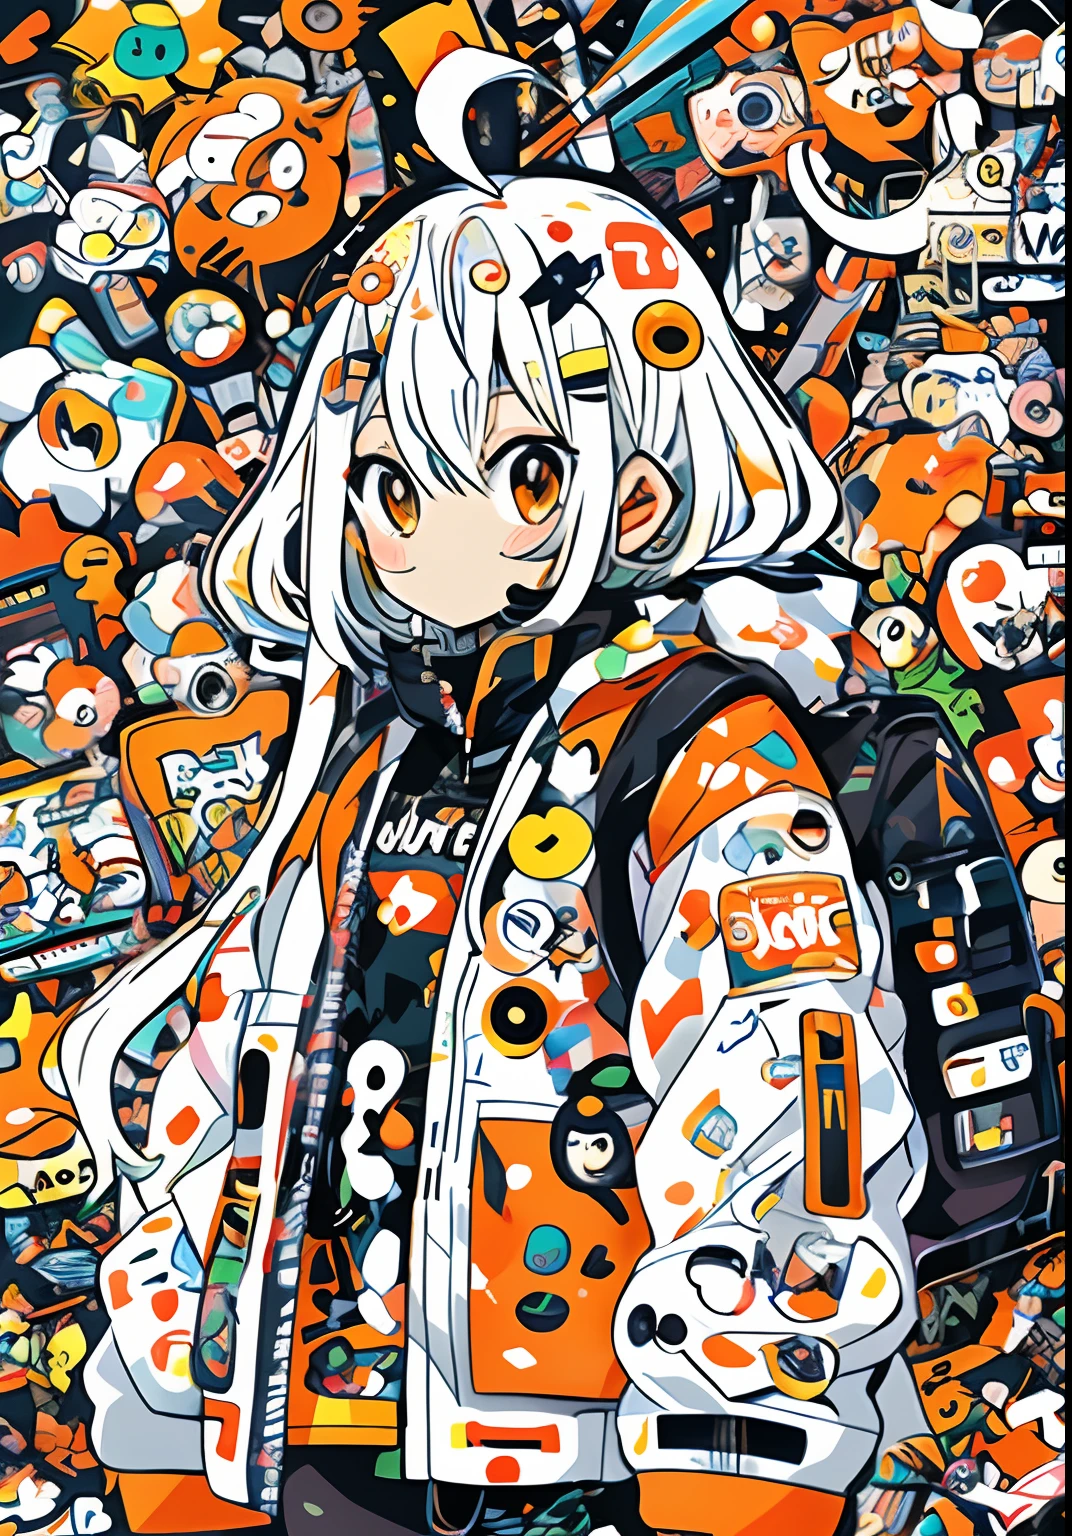 Anime Chica with orange and white jacket and black jacket surrounded by stickers, Estética del anime mecha, estilo anime 4k, ilustración gráfica de anime, mecha estética, anime robótico mezclado con orgánico, ilustración de anime digital, ilustración de estilo animado, Lindo estilo artístico, ilustración animada, Anime Manga Robot!! Chica anime, ilustraciones de estilo anime, arte digital del anime cyberpunk, completamente robótico!! Chica